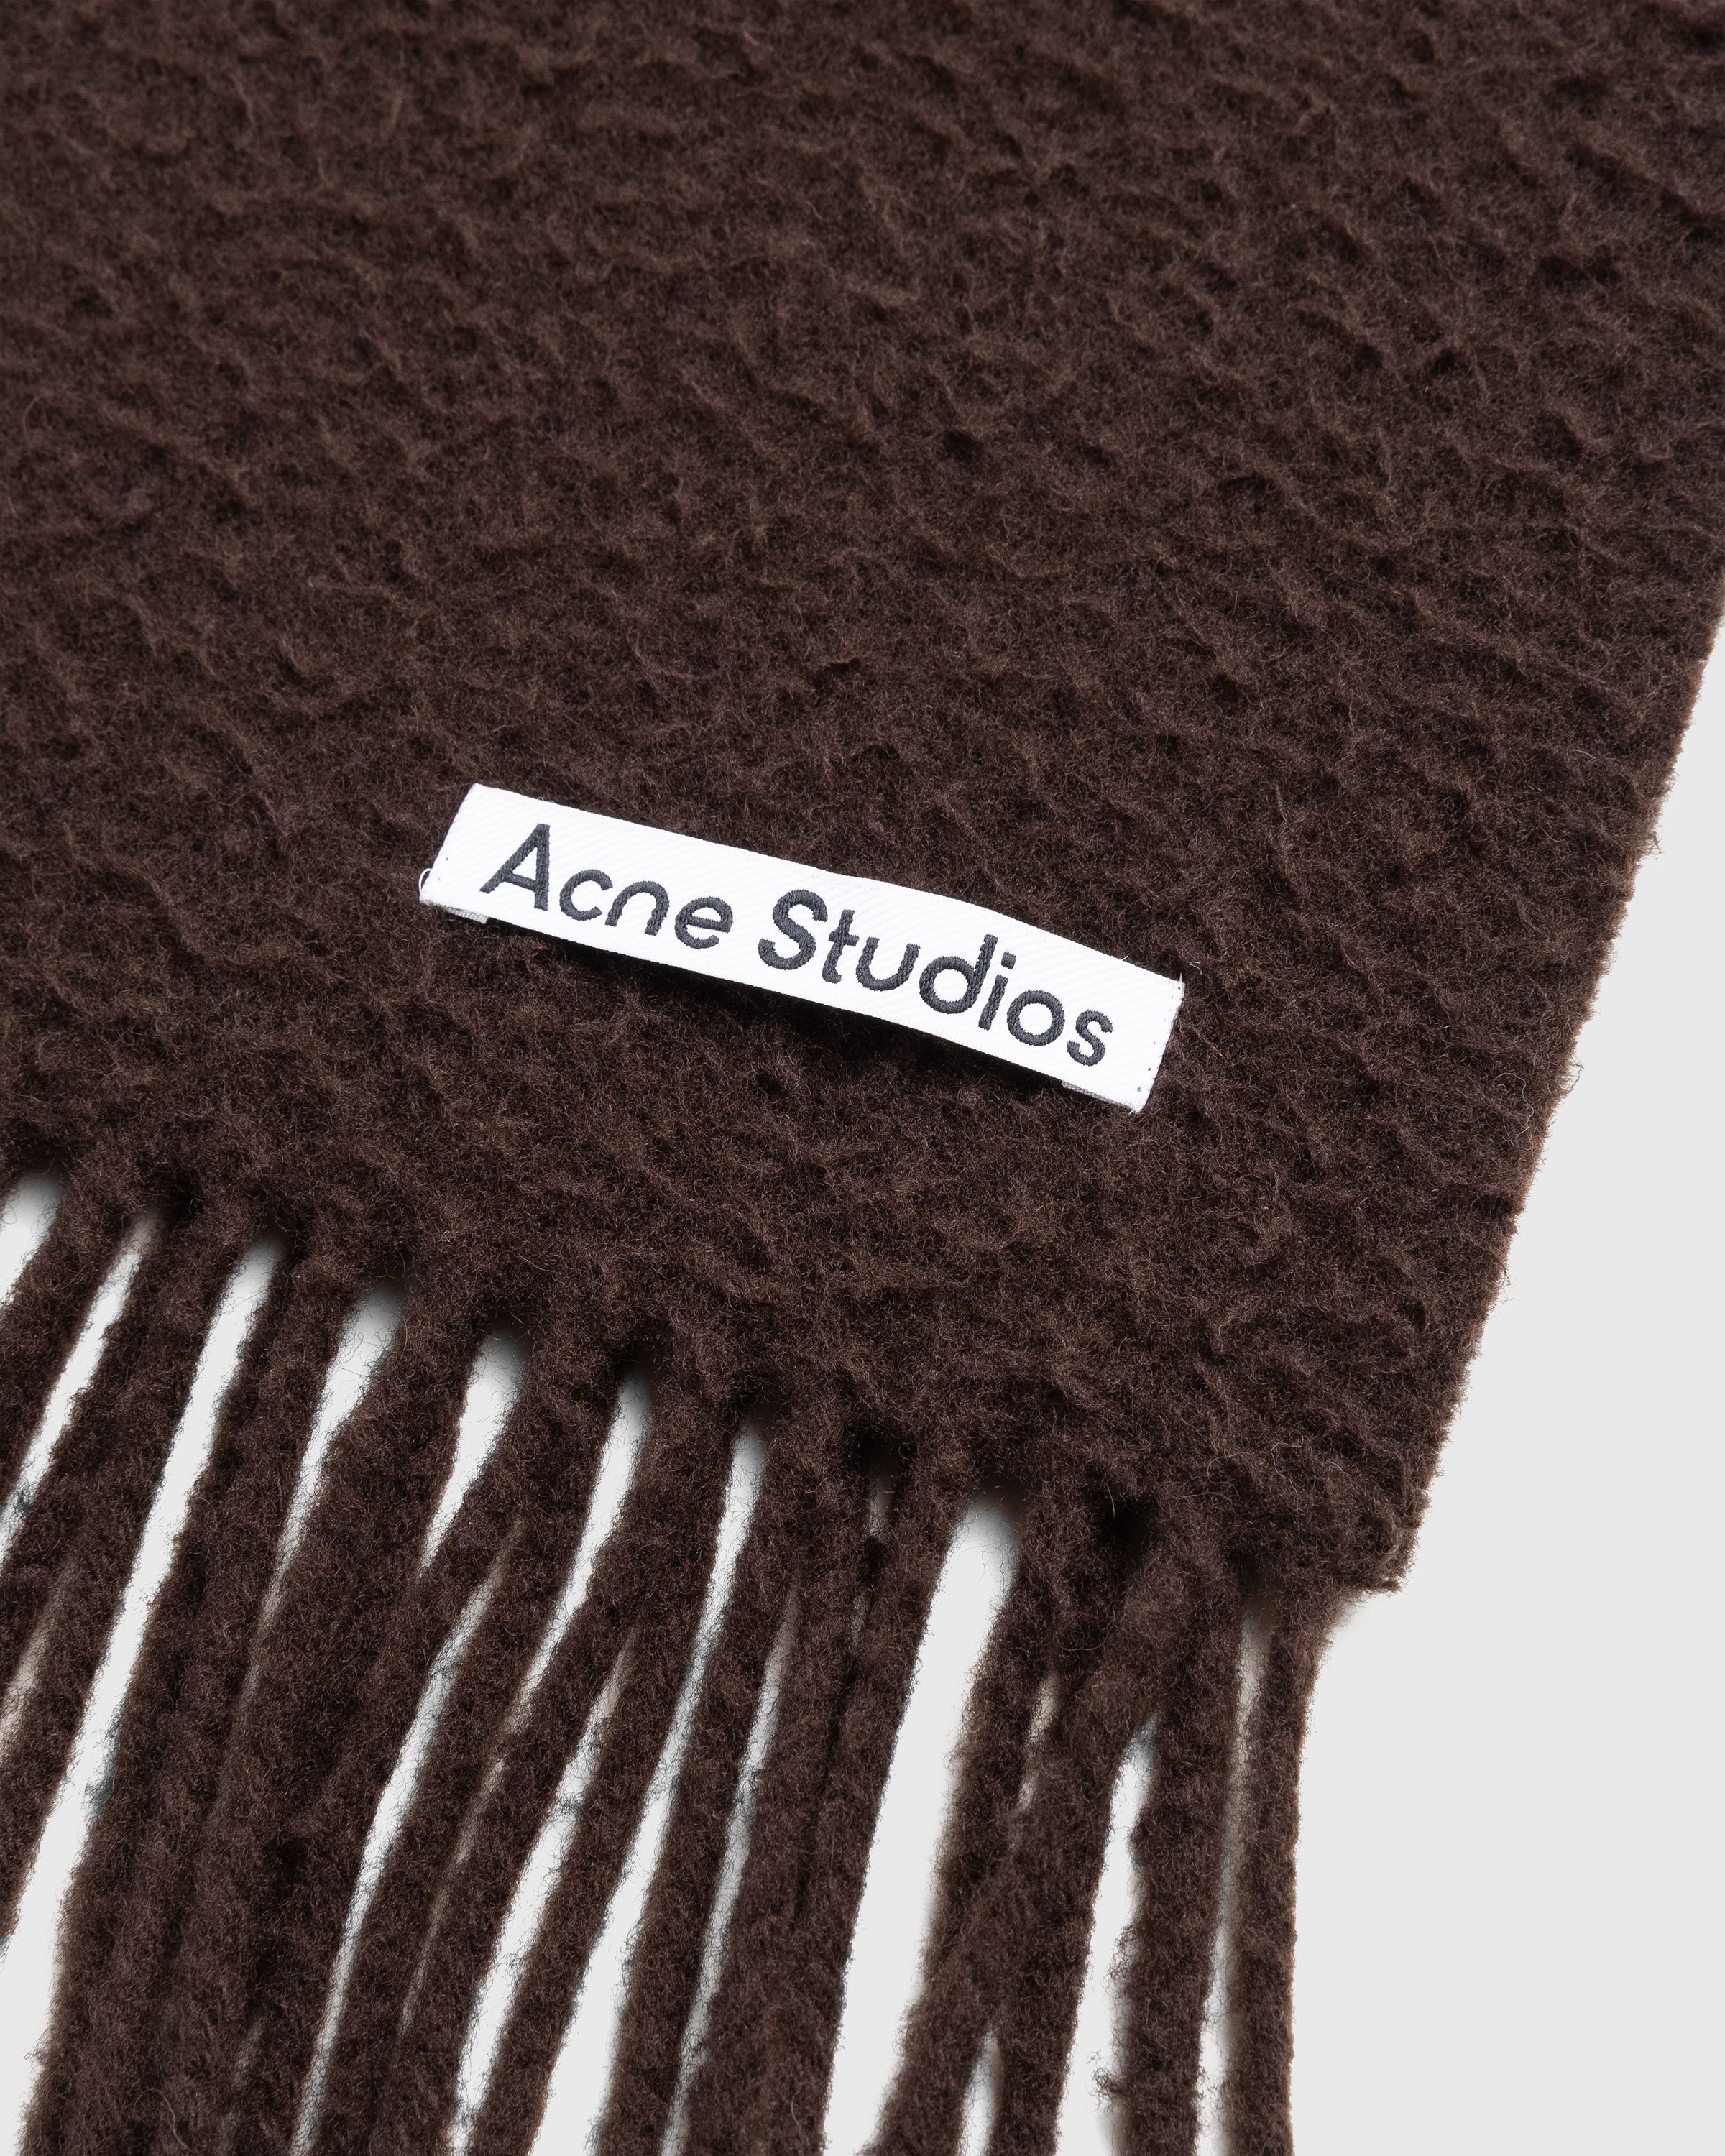 Acne Studios - Wool Fringe Scarf Chocolate Brown - Accessories - Brown - Image 4